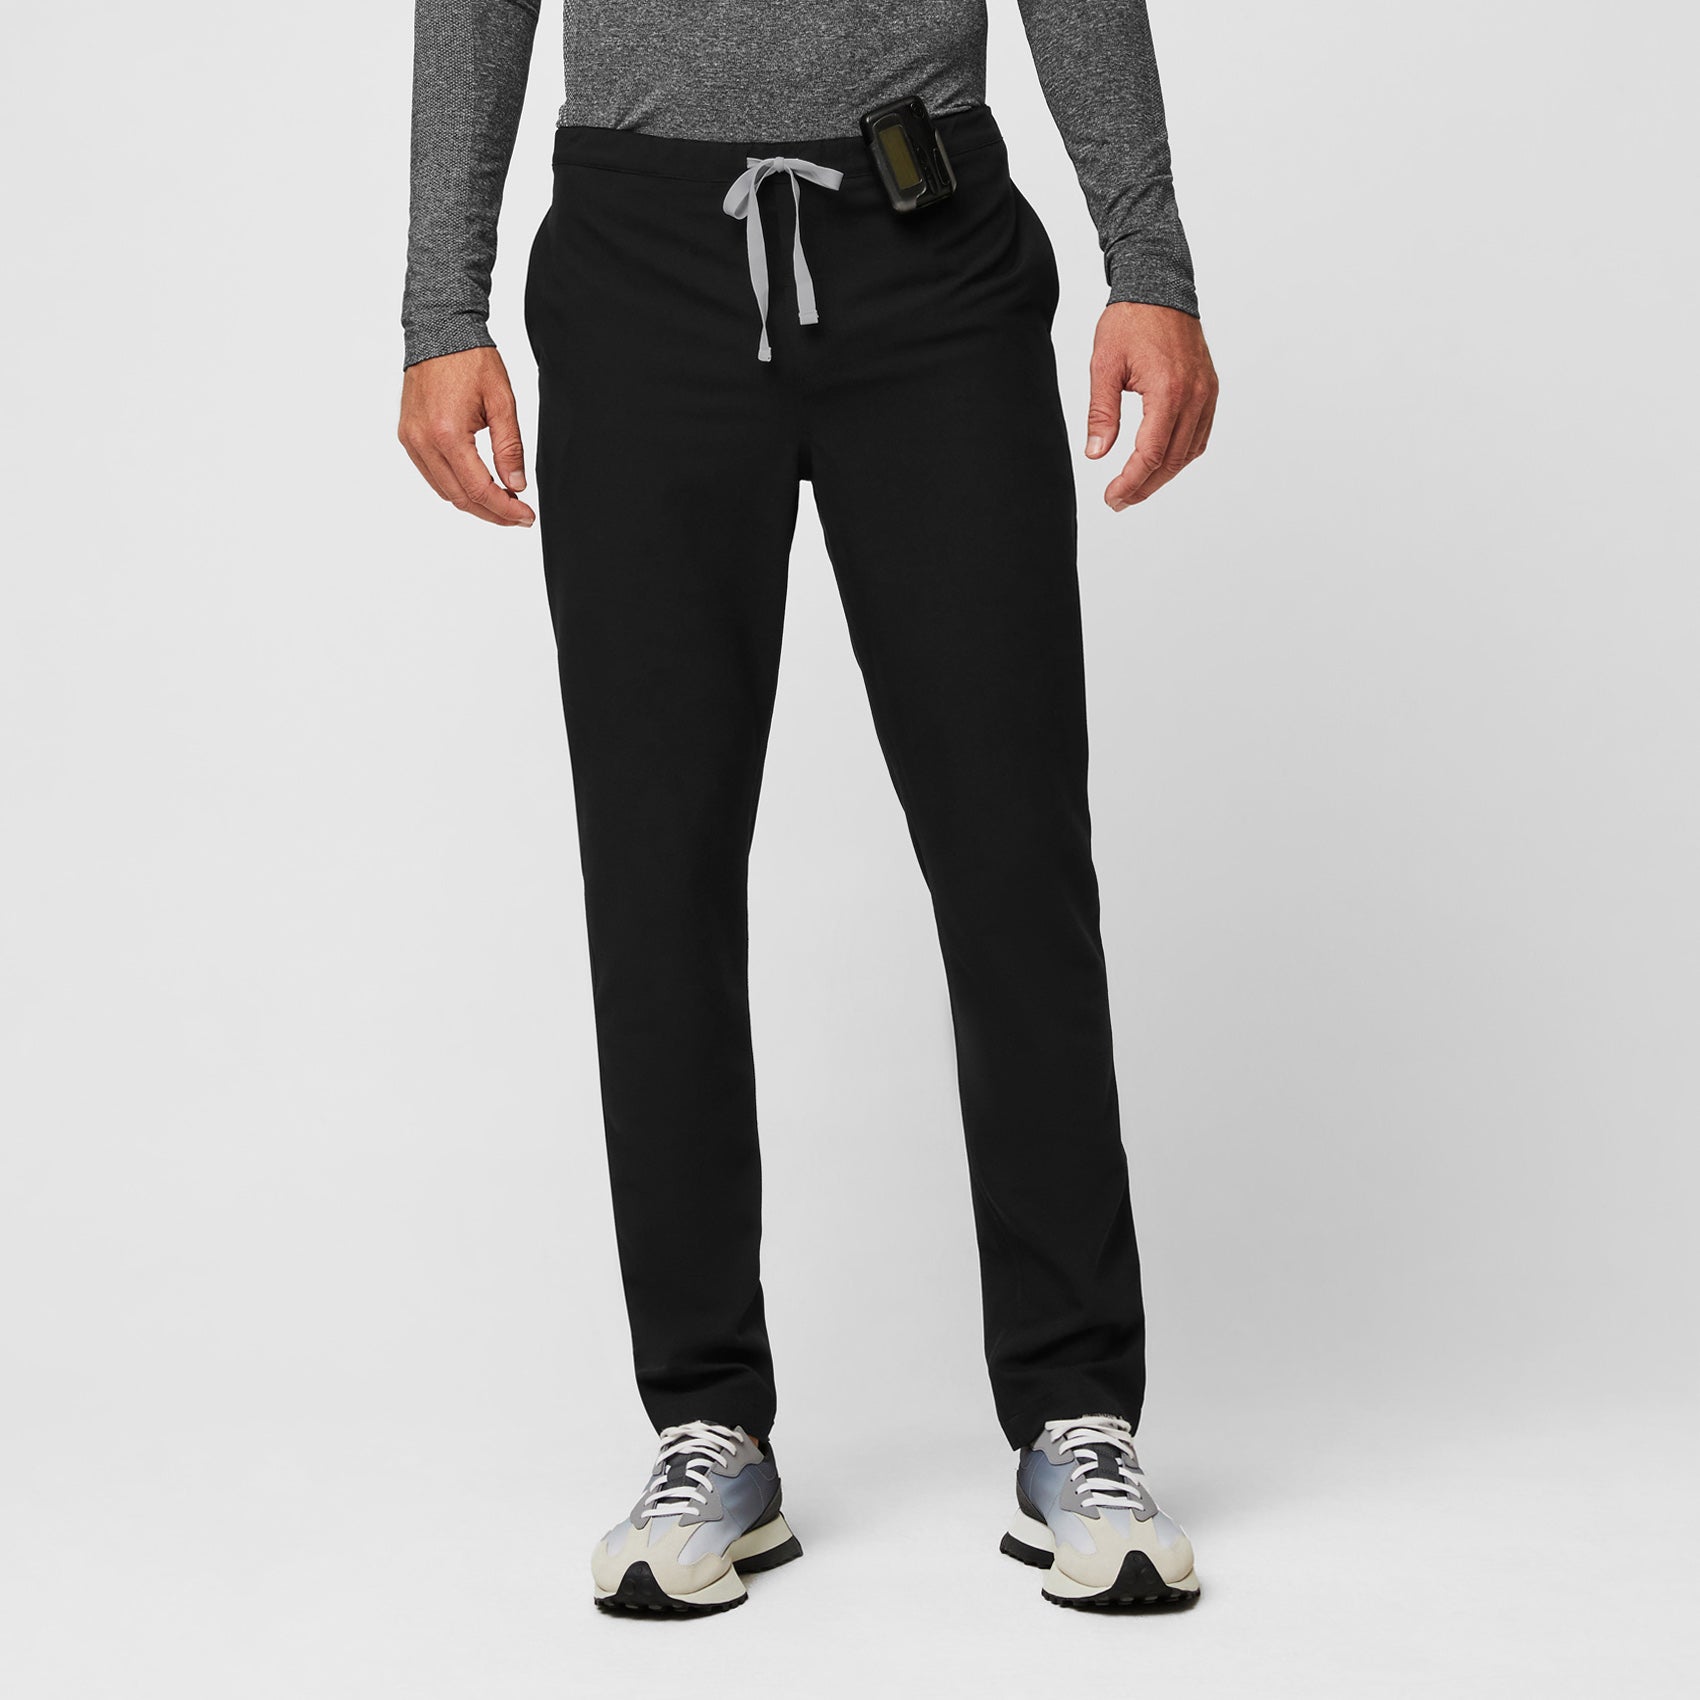 Buy JOCKEY Black Solid Cotton Blend Slim Fit Men's Track Pants | Shoppers  Stop